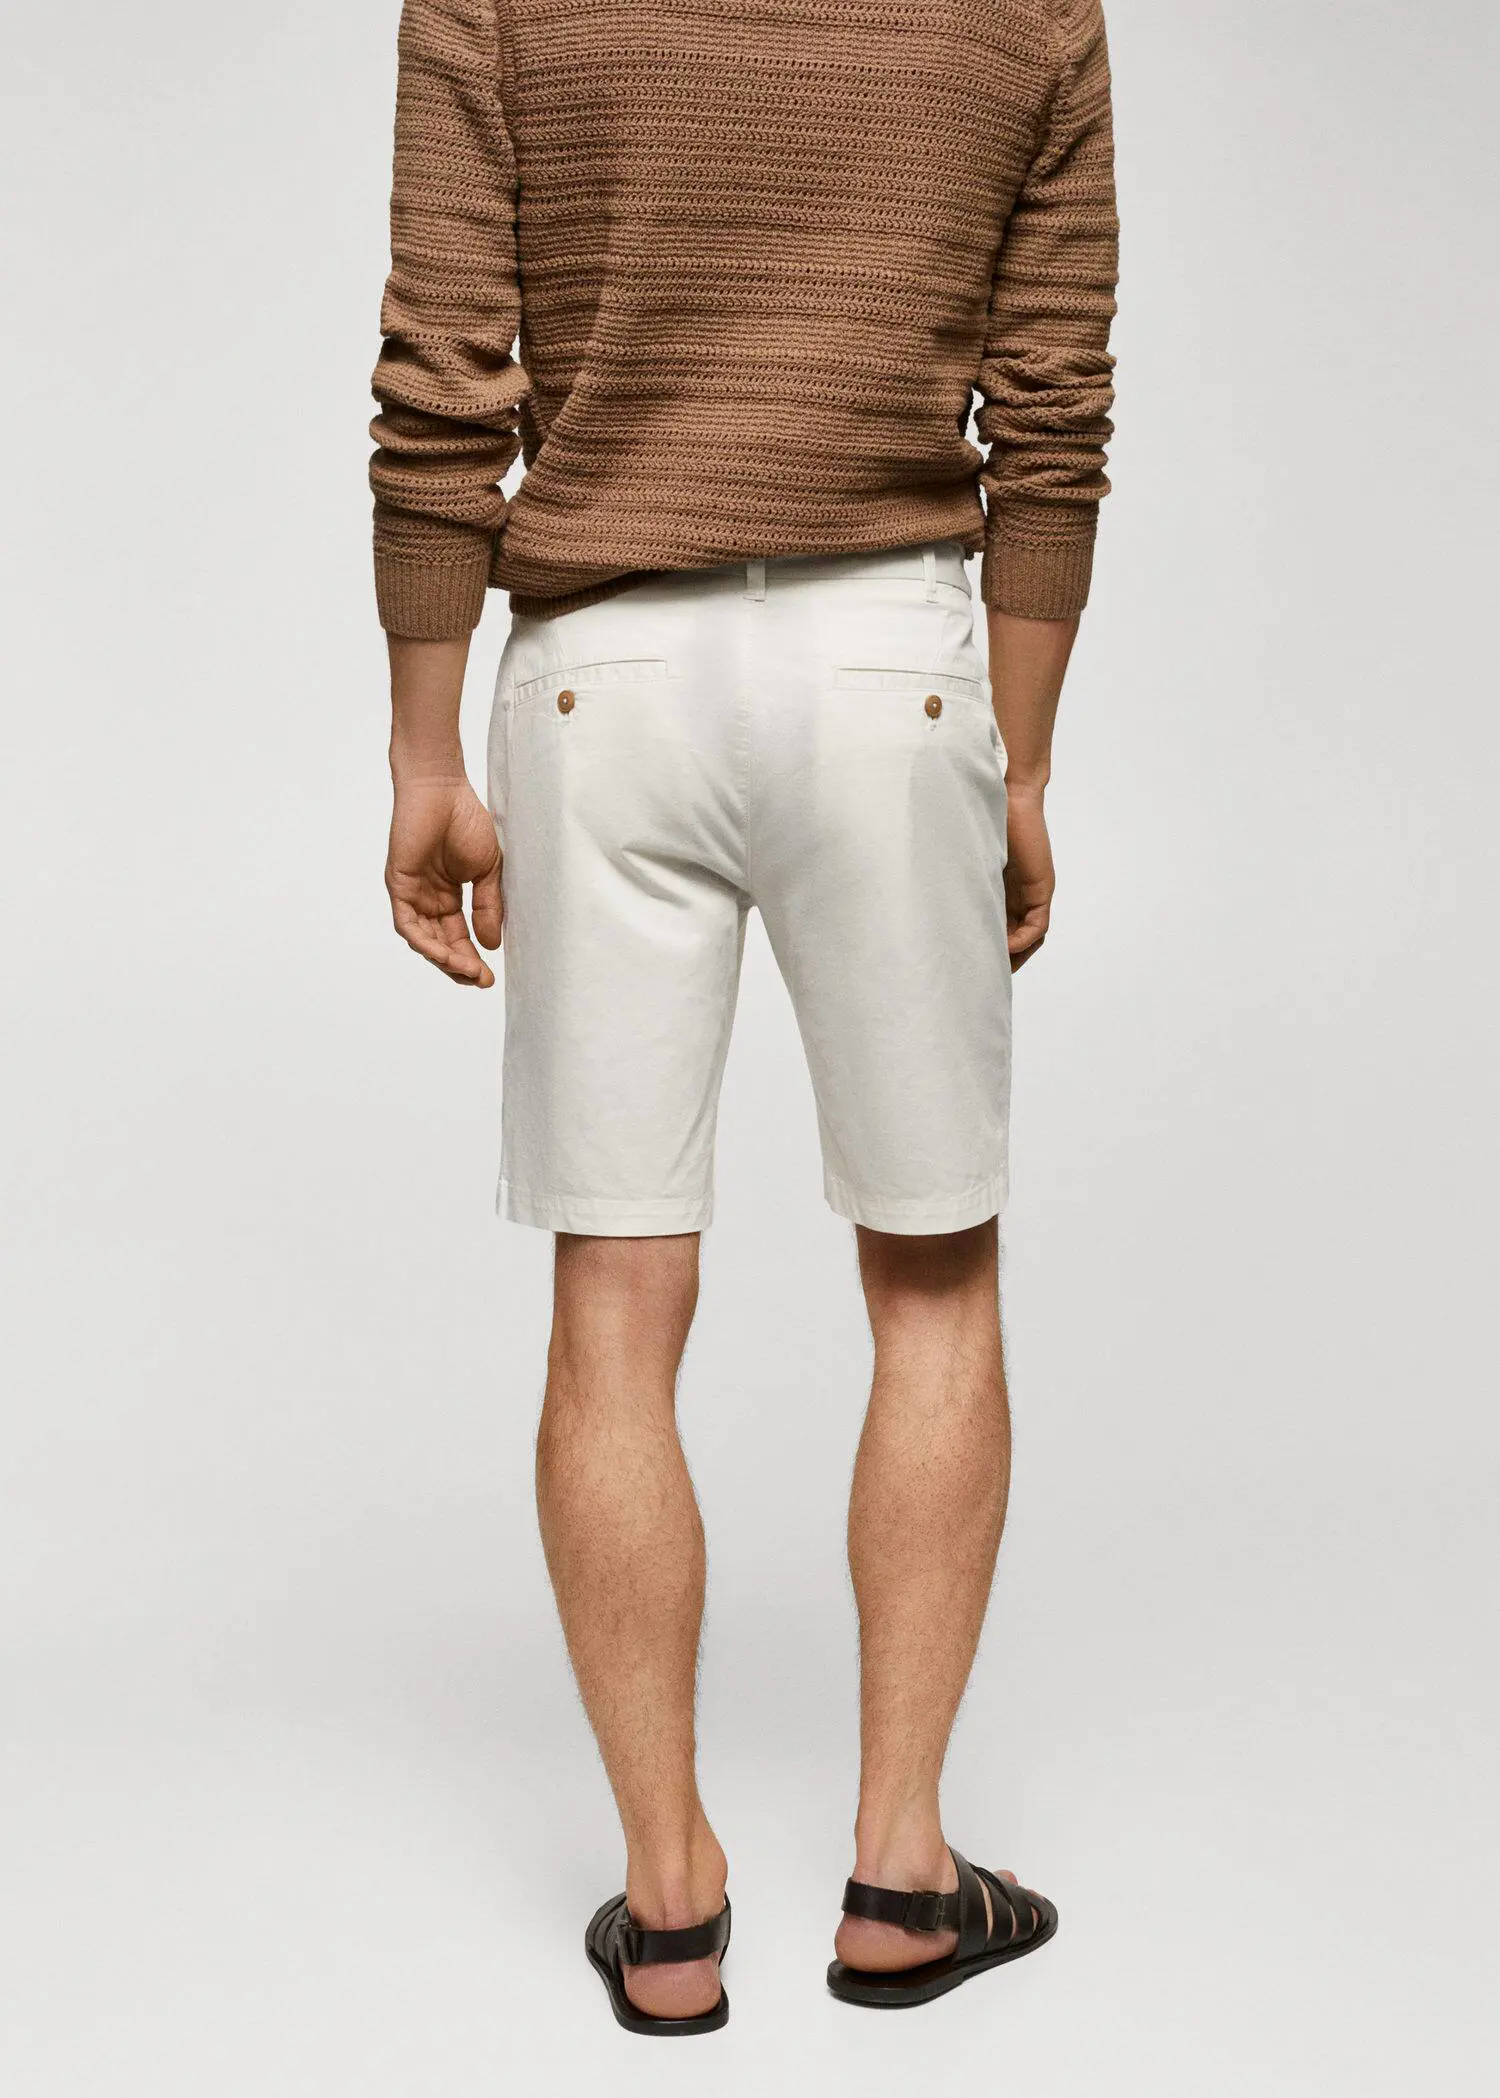 Mango Chino Bermuda shorts. a man wearing white shorts and a brown sweater. 